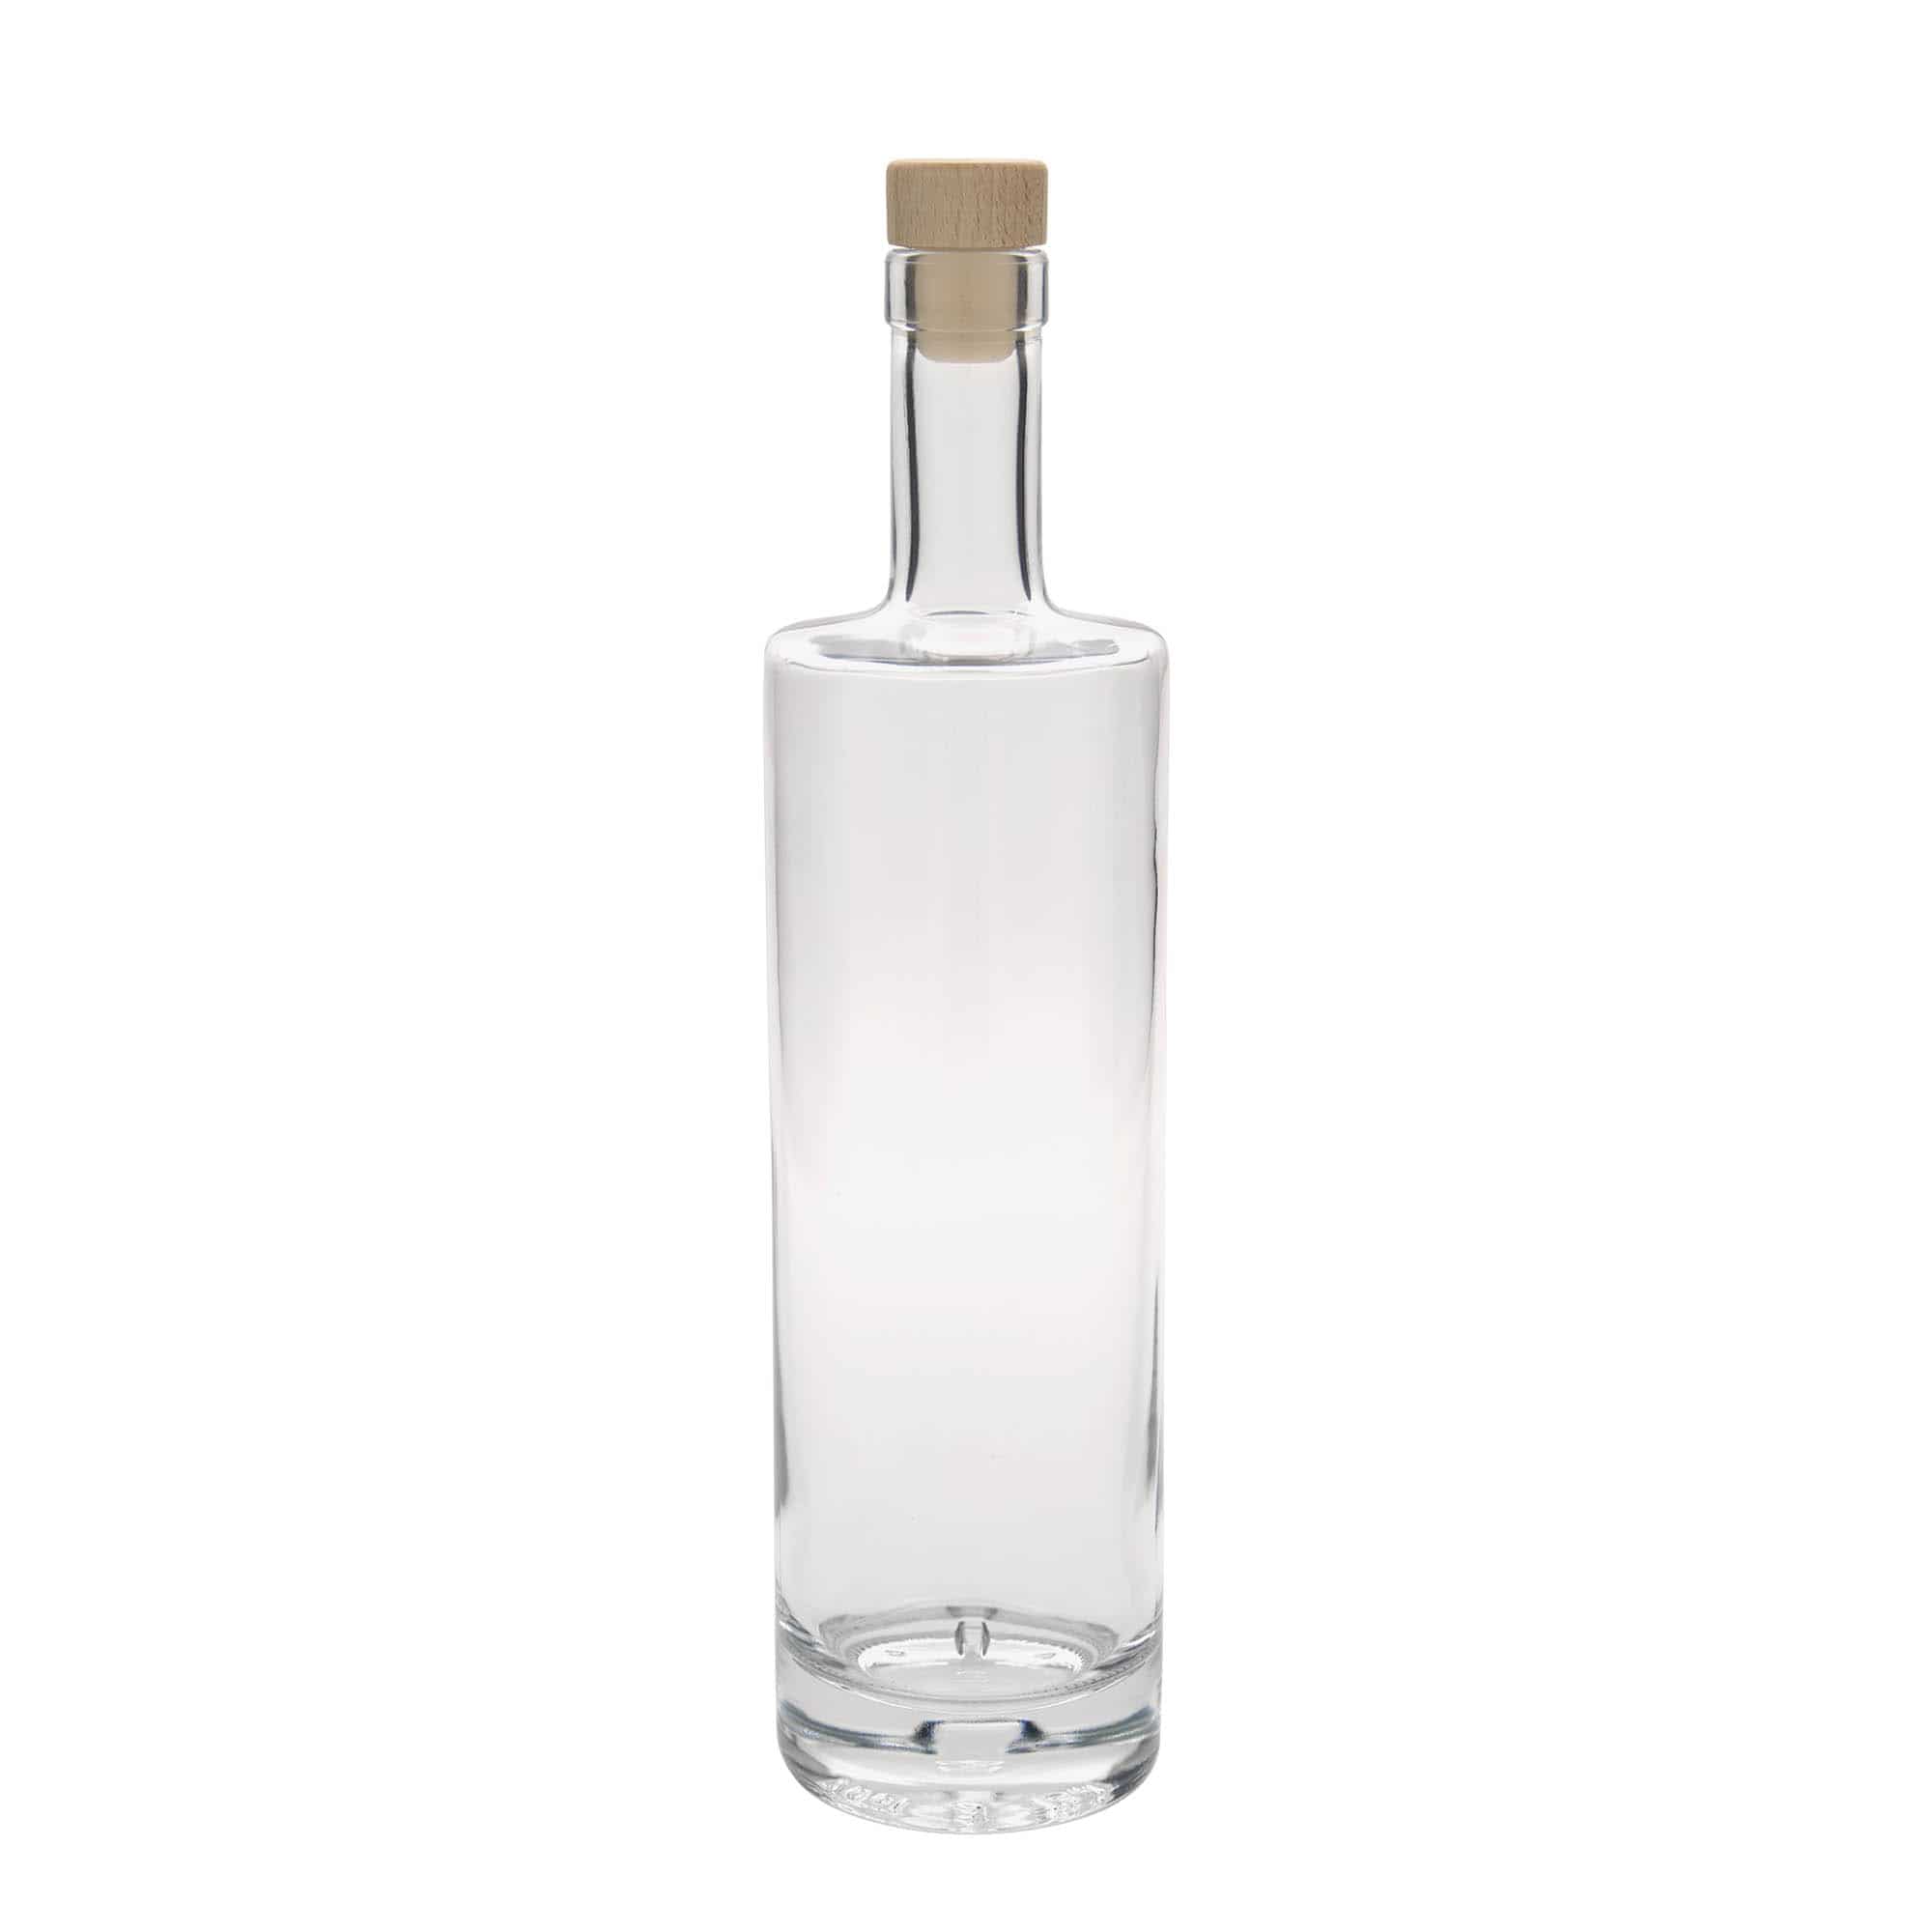 700 ml glass bottle 'Titano', closure: cork